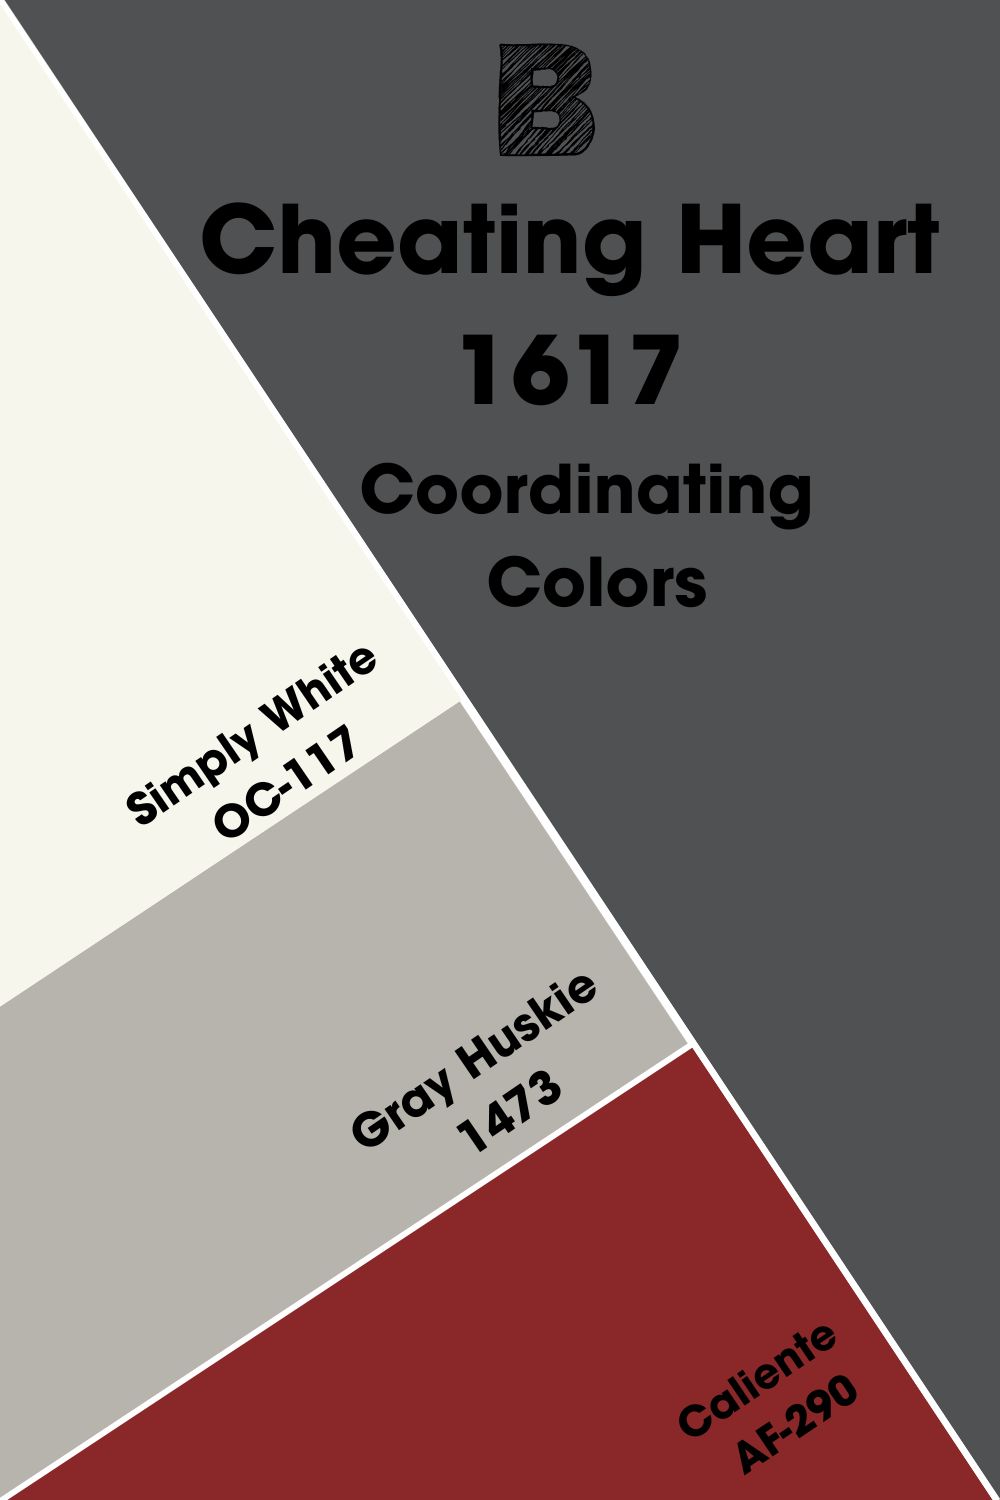 Coordinating Colors